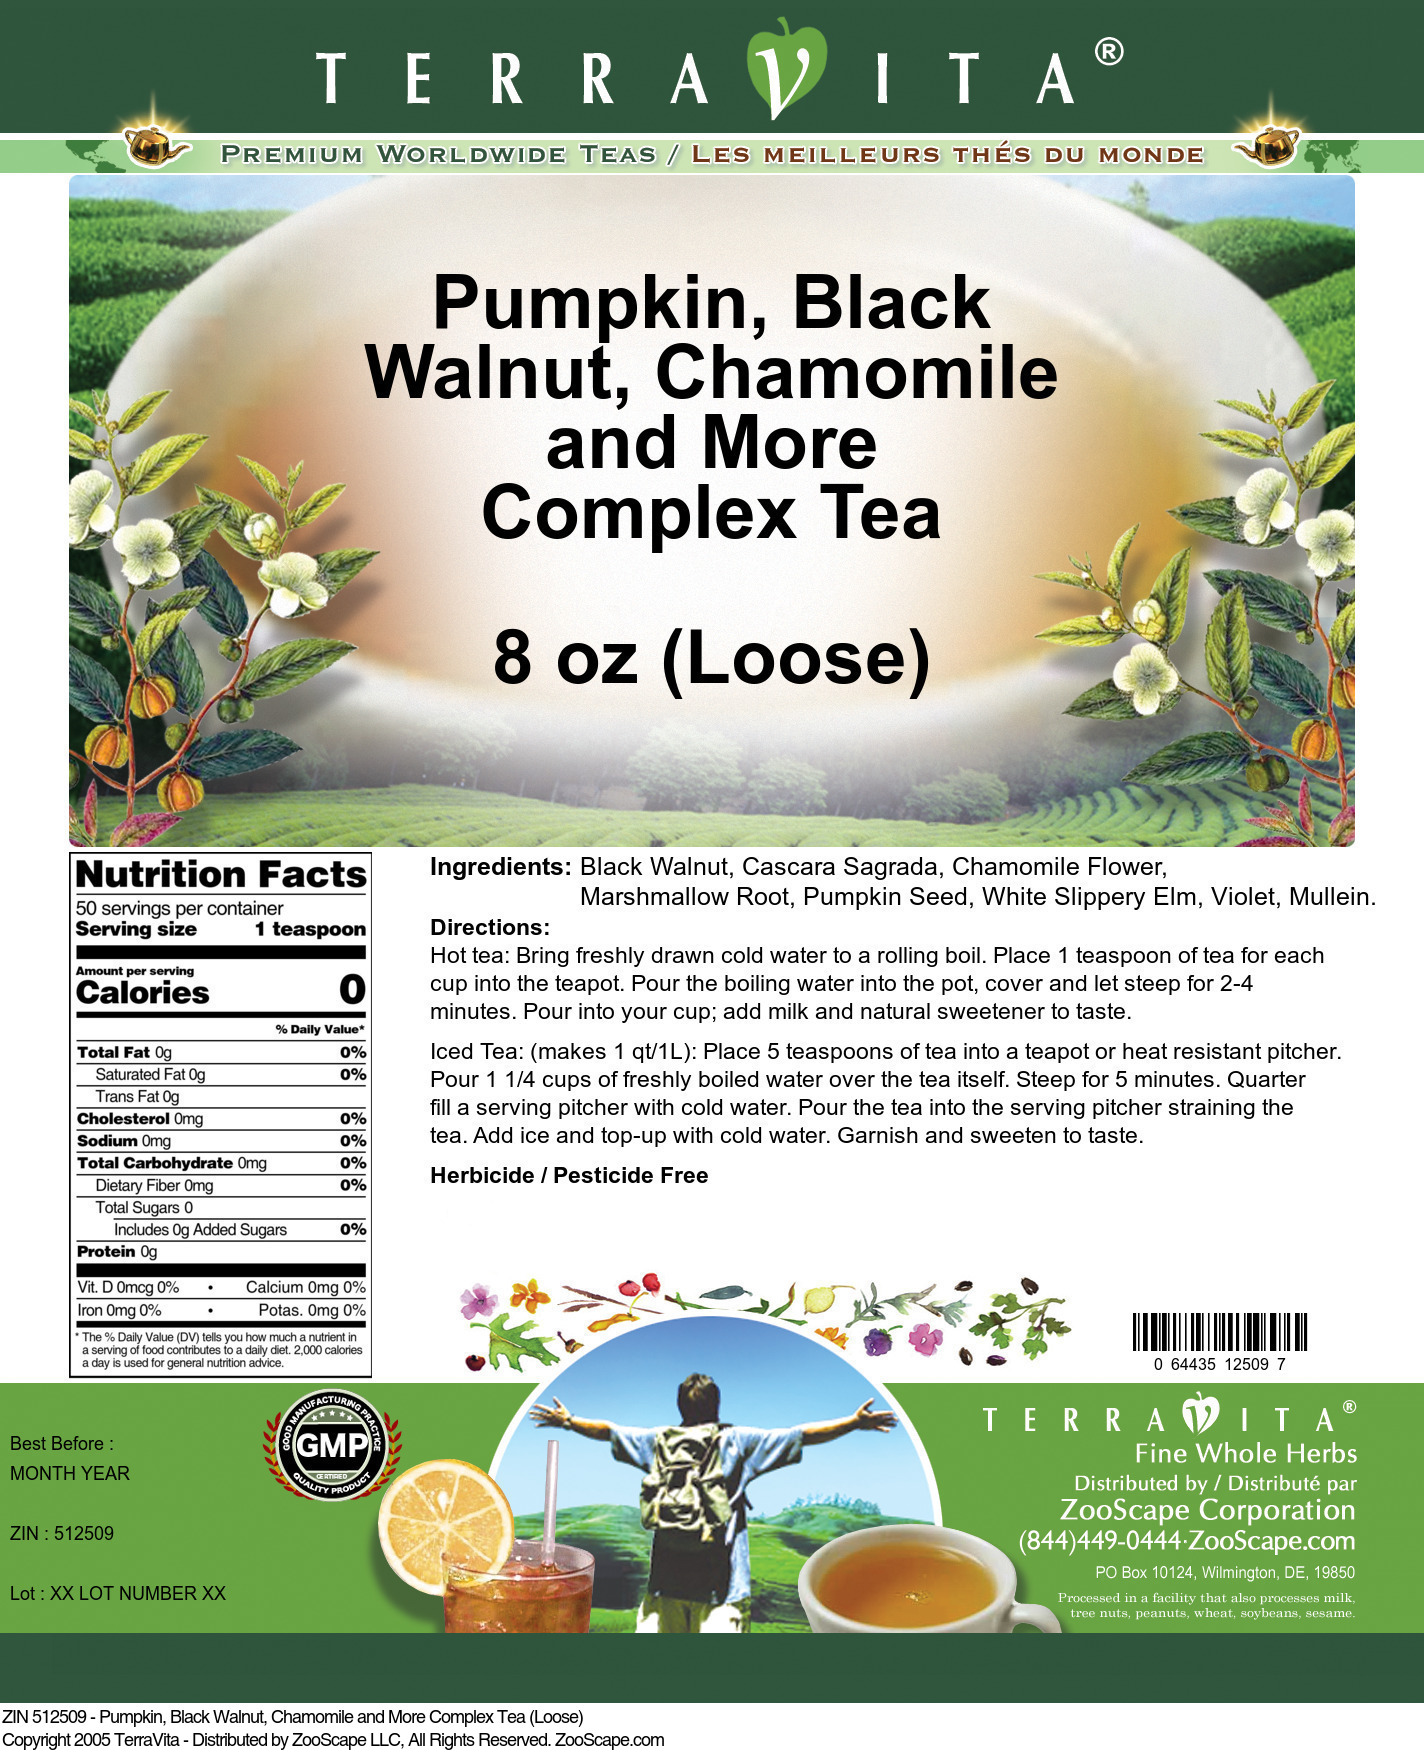 Pumpkin, Black Walnut, Chamomile and More Complex Tea (Loose) - Label